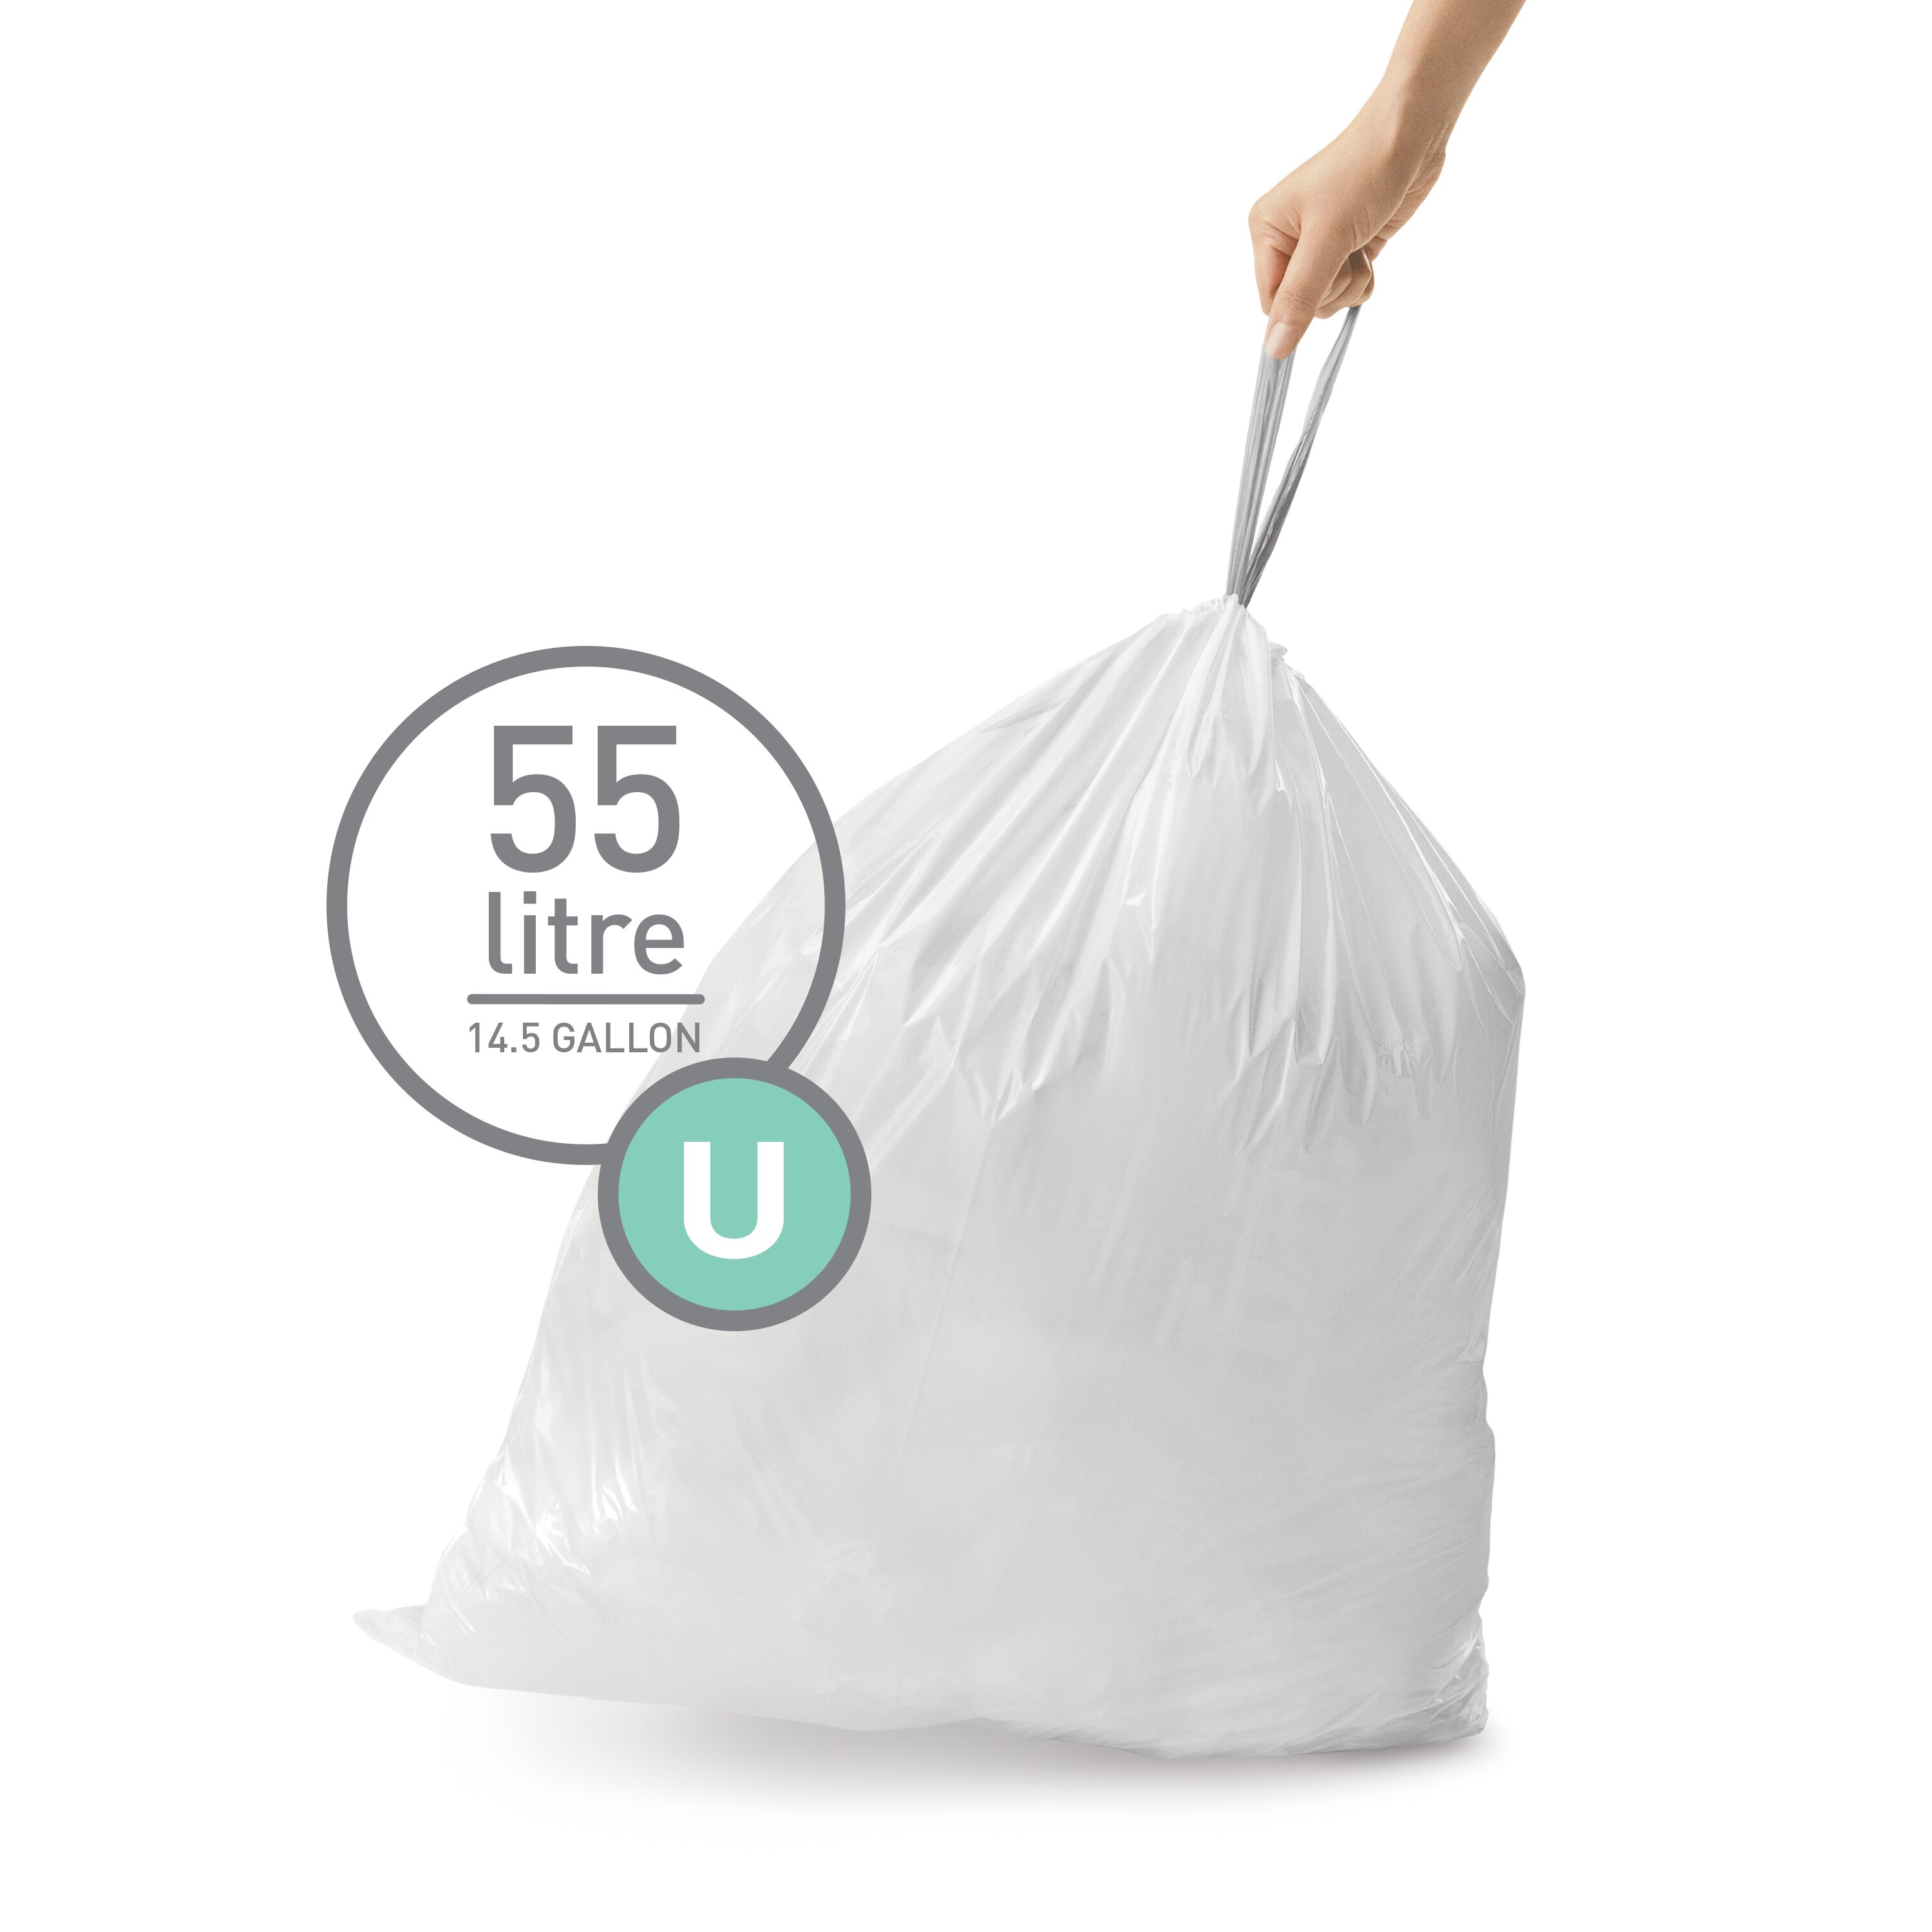 Simplehuman Code G Custom Fit Drawstring Trash Bags 30 Litters (60